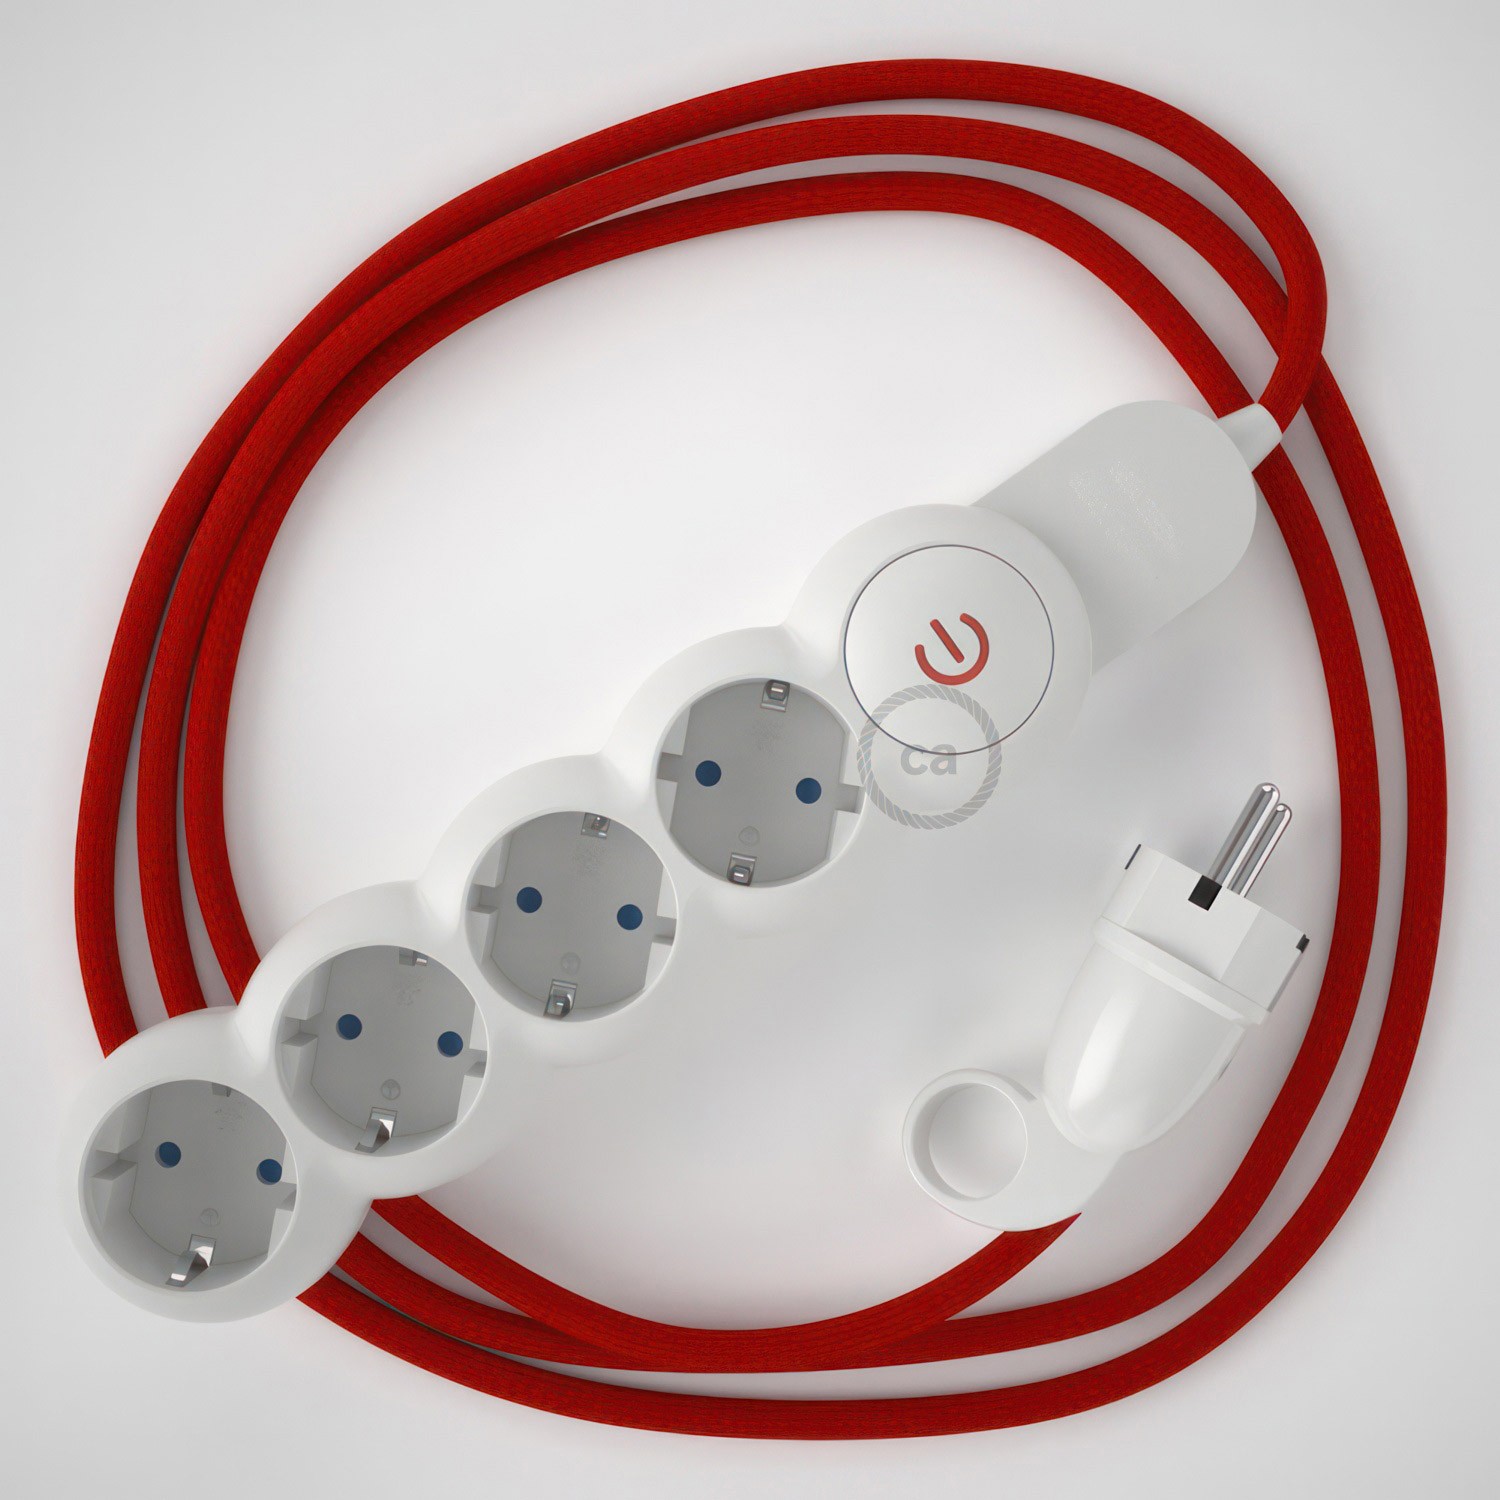 Razdjelnik s električnim kabelom, presvučen crvenim RM09 tekstilom i s udobnim šuko utikačem